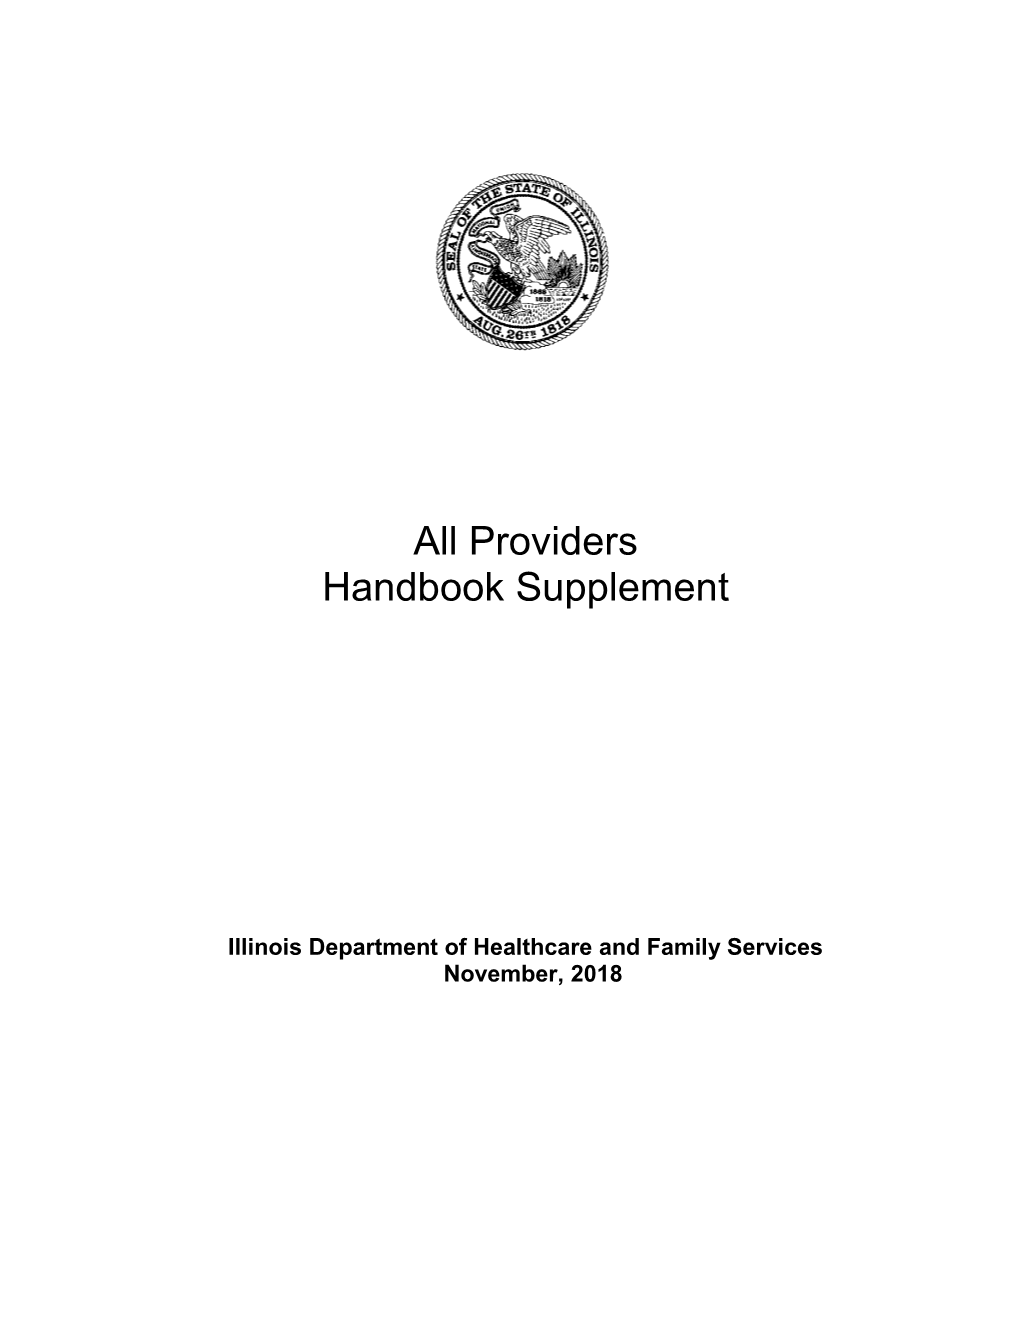 All Providers Handbook Supplement